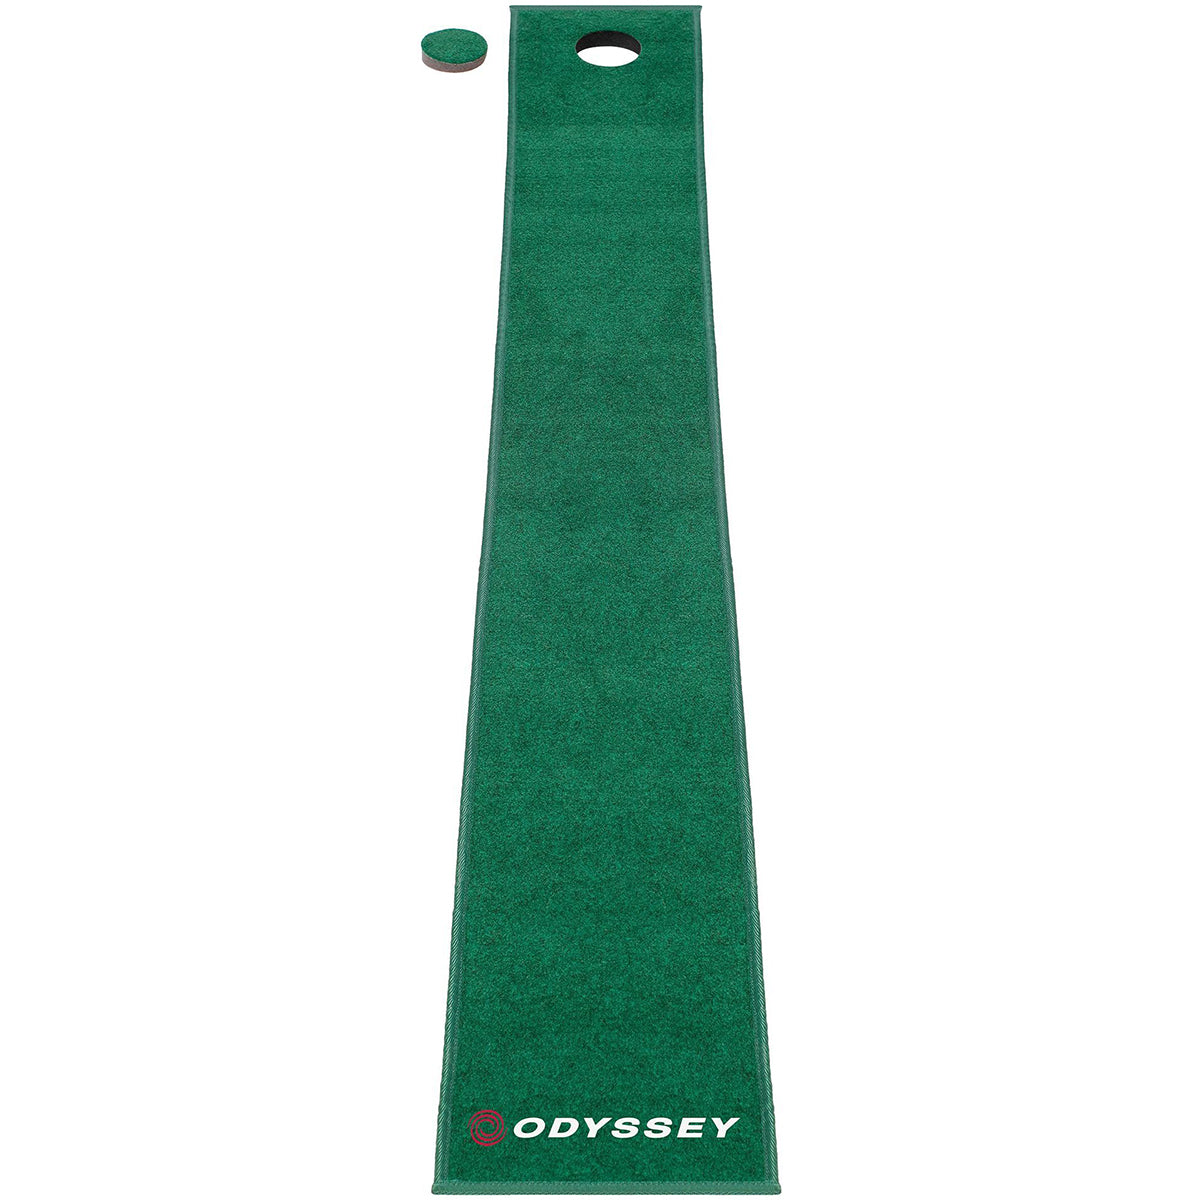 Odyssey 8' x 1' Golf Putting Mat - Green Odyssey